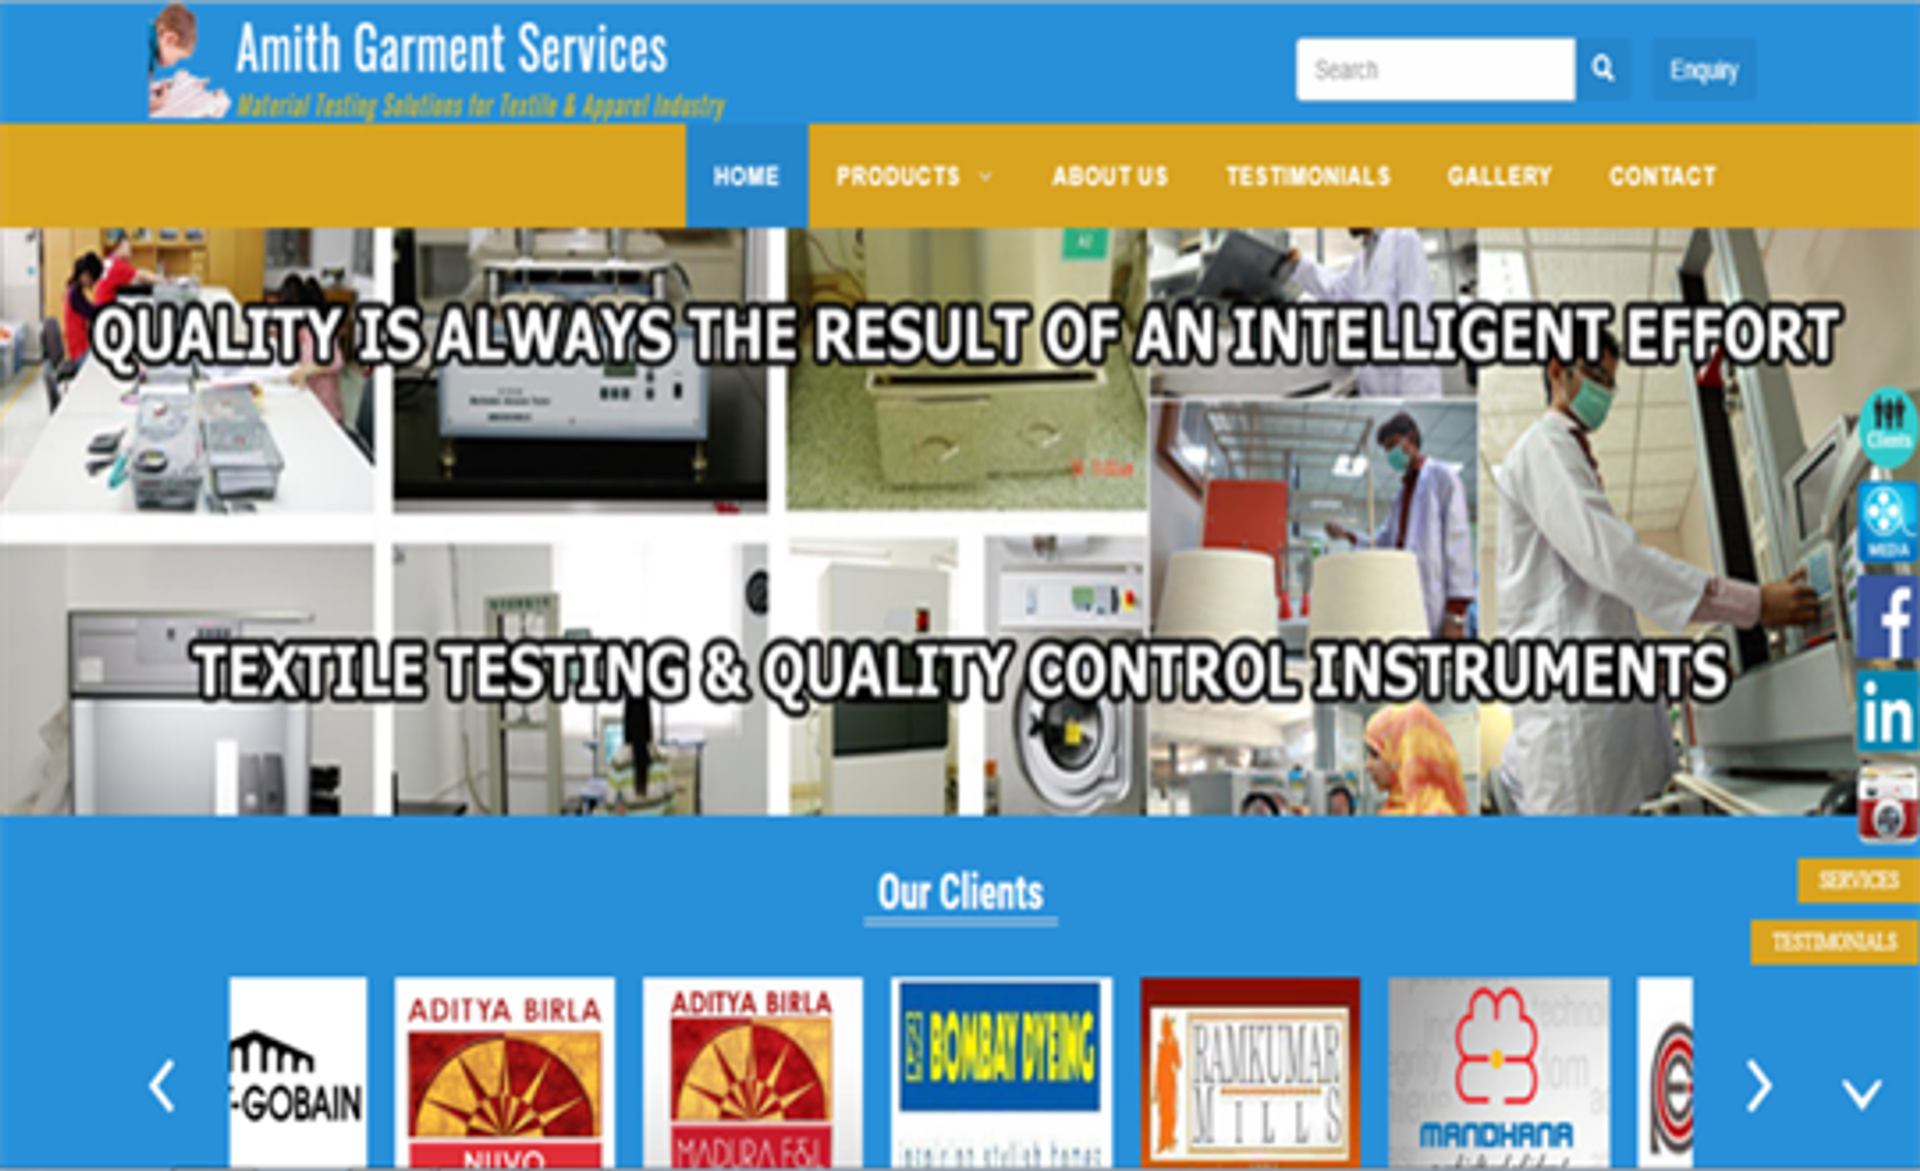 Amith Garment Services